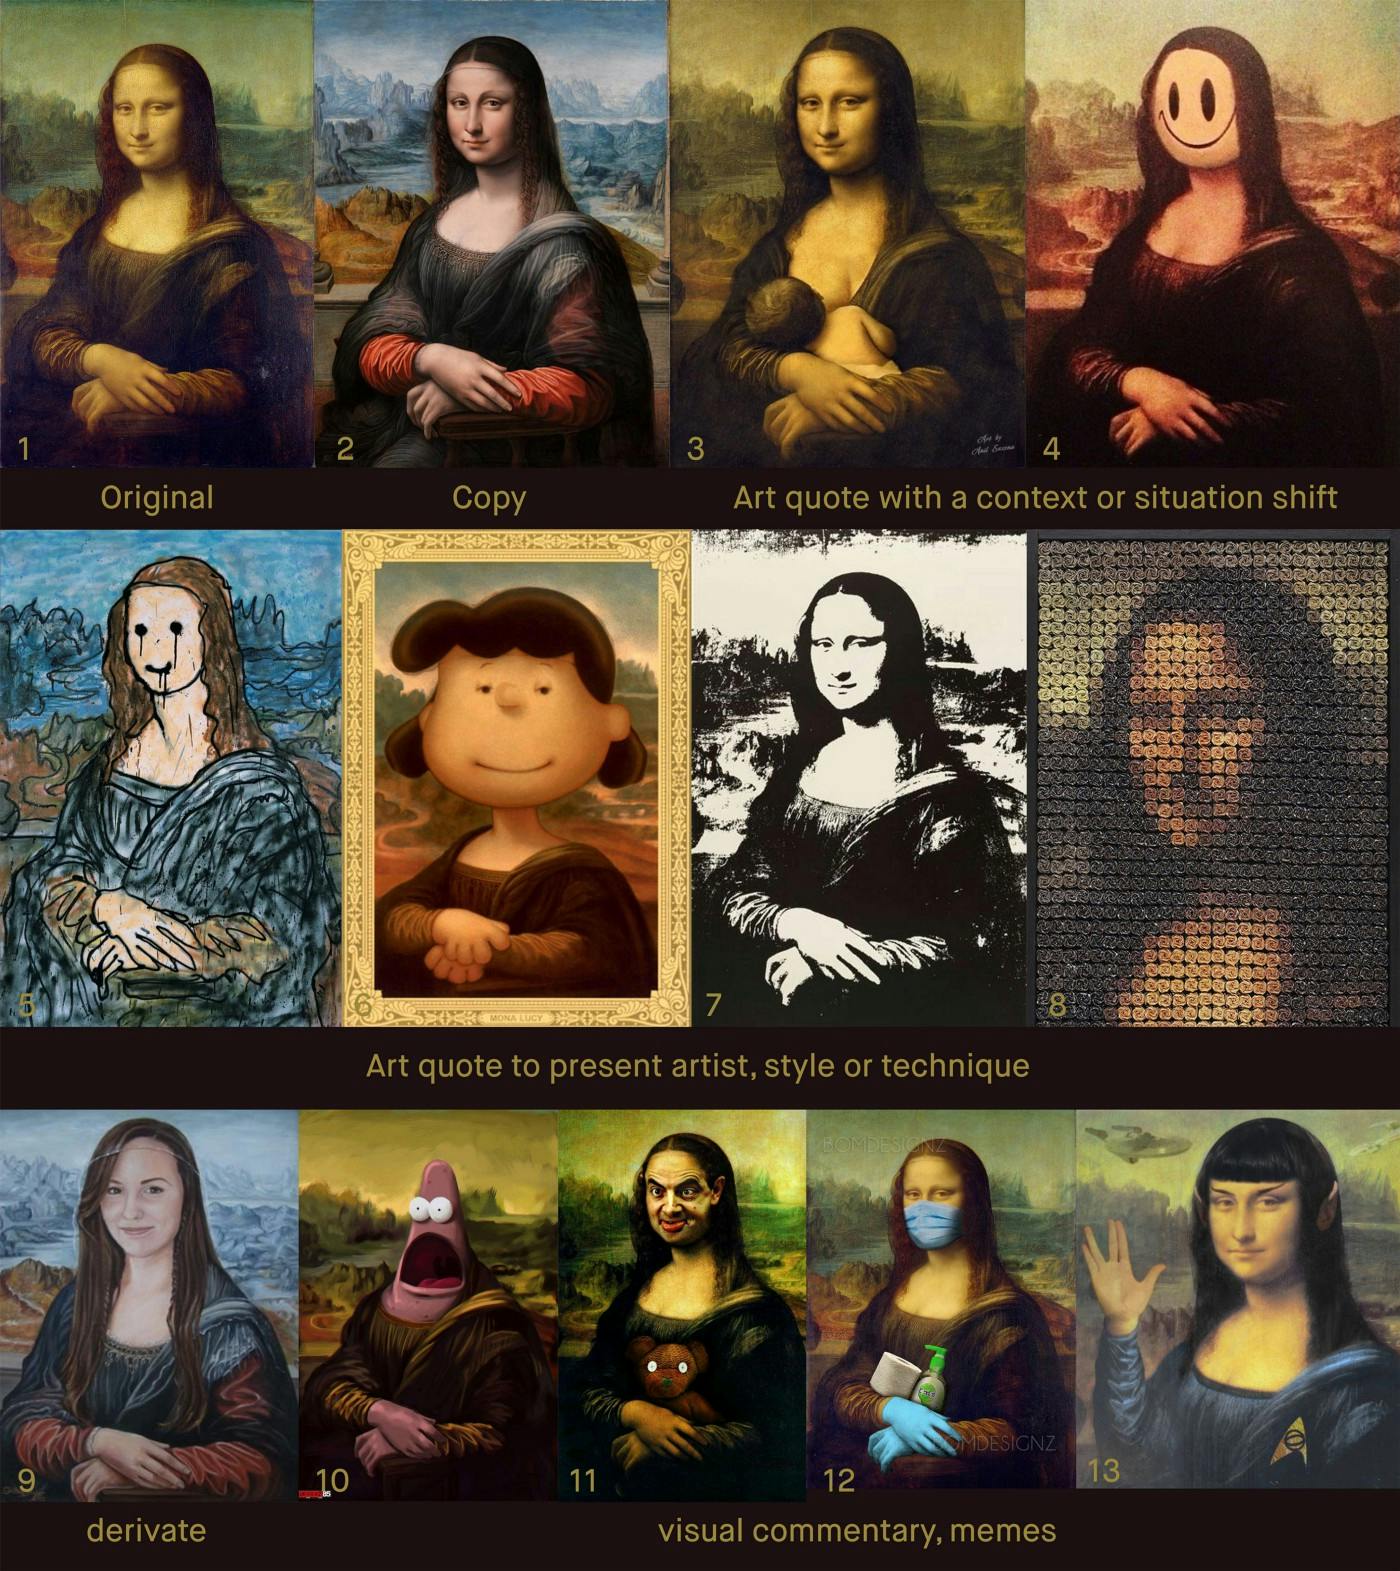 Selection from hundreds of derivates, copies, and quotes of Mona Lisa. (1 Mona Lisa, Leonardo da Vinci, cca 1517 / 2 Prado Mona Lisa, da Vinci Workshop, the same period as original / 3 Monalisa feeding milk, anil saxena, 2014 / 4 Mona Lisa Smile, Banksy, 2004 / 5 Mona Lisa, MADSAKI, 2019 / 6 Mona Lucy, Mark Stephens, 2016 / 7 Mona Lisa, Andy Warhol, cca 1979 / 8 Mona Lisa Origami, Kazuki Kikuchi, 2016 / 9 Smile, Delmus Phelps, N/A / 10 Mona Patrick, Tobsen85, 2015 / 11 meme, source N/A / 12 Quarantine Mona Lisa, bomdesignz, 2020 / 13 meme, source N/A